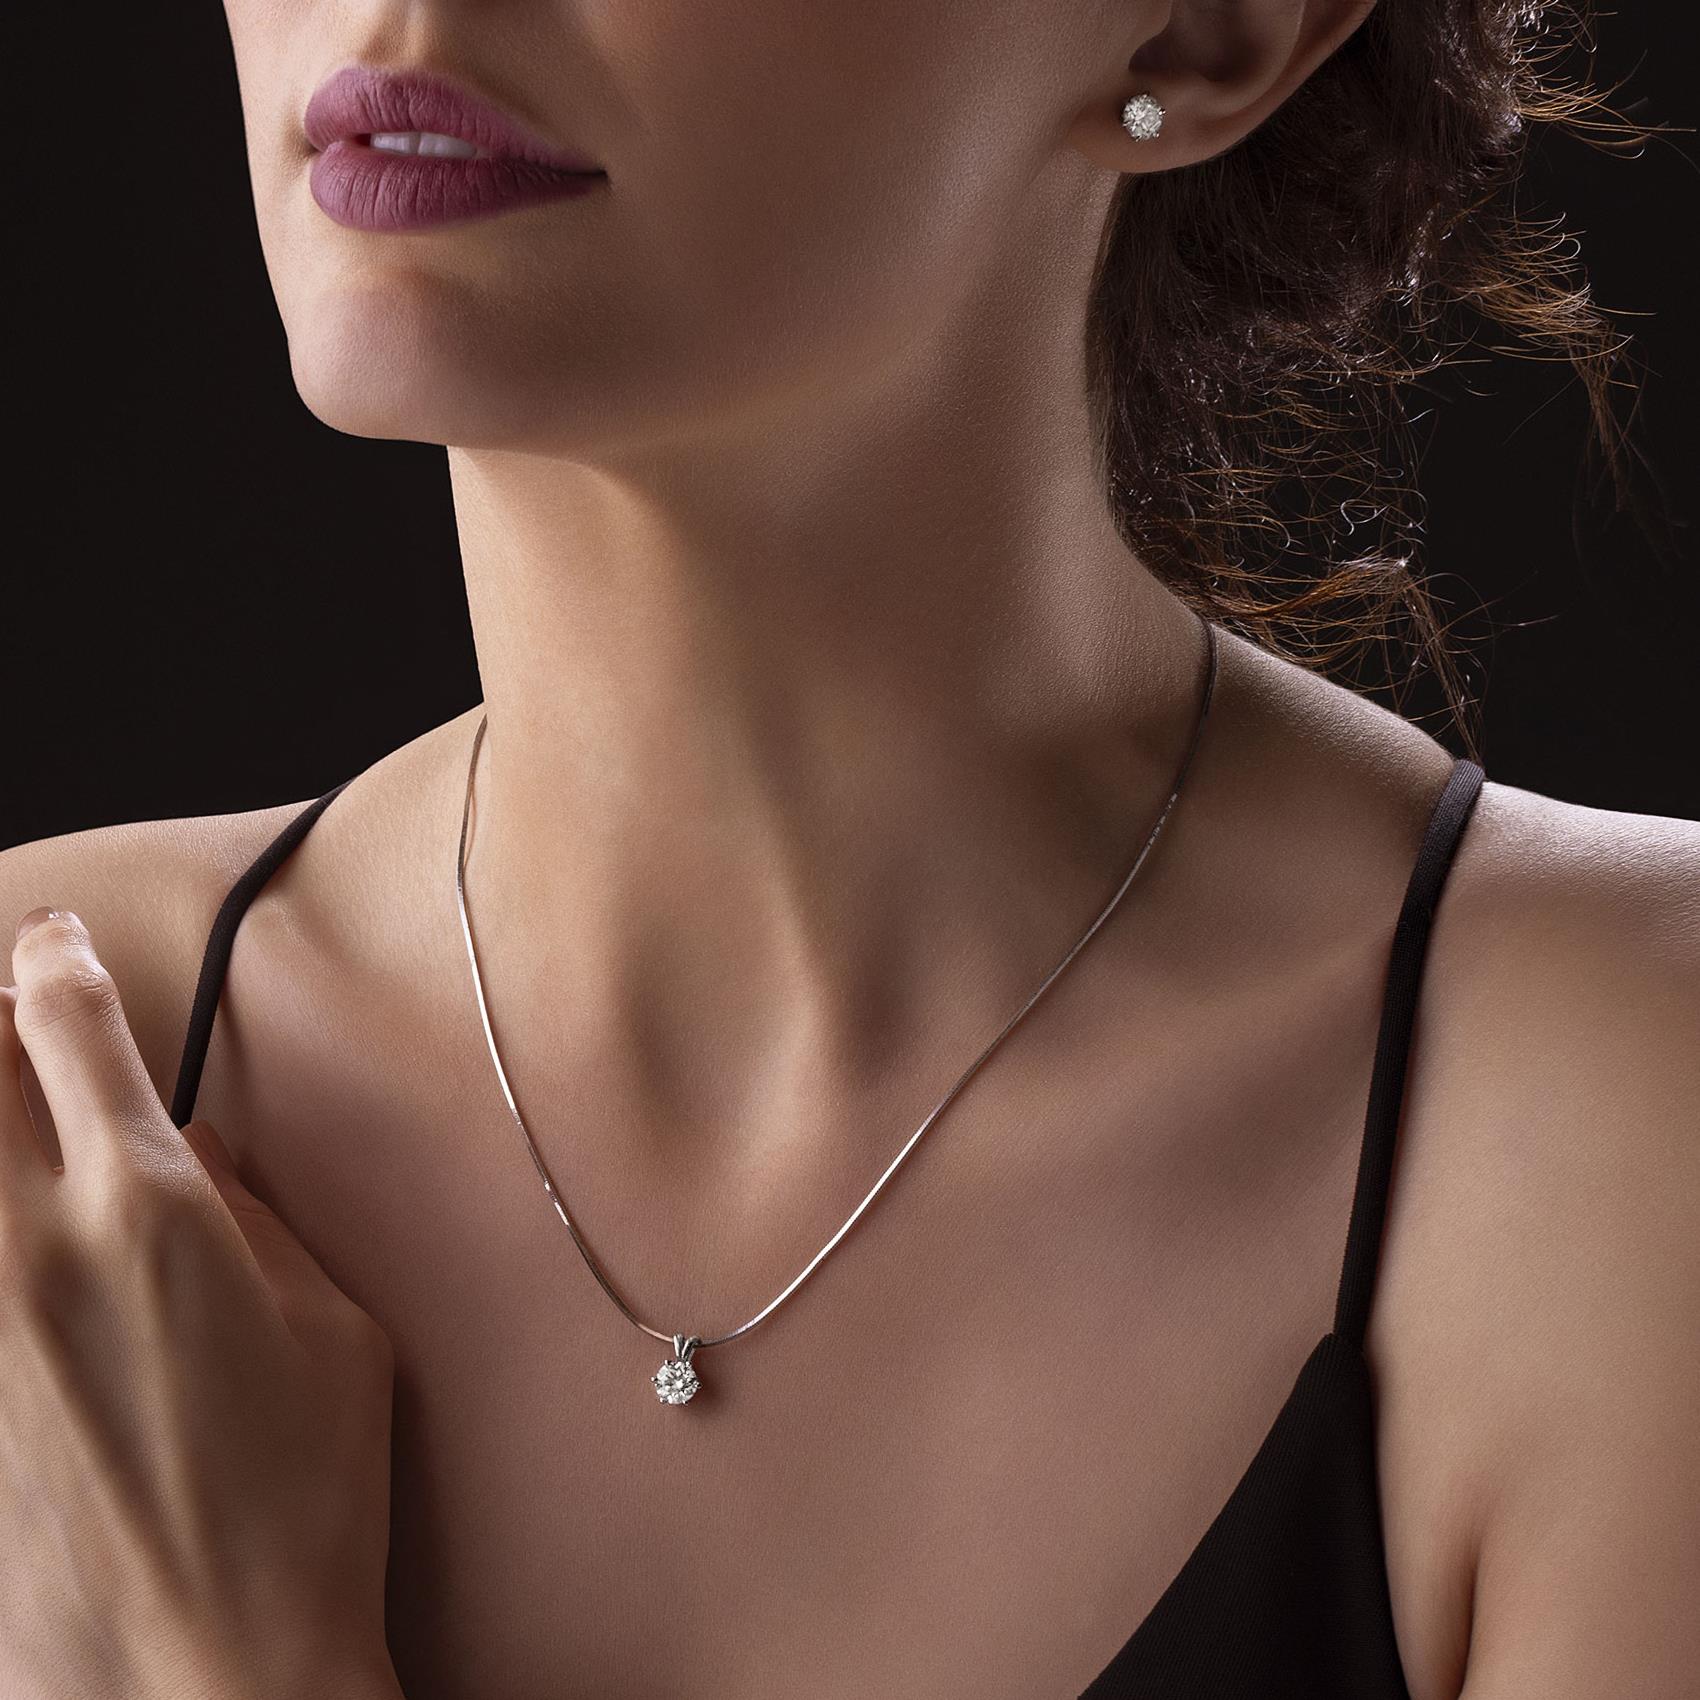 1-Carat MYZA Sterling Silver Necklace & Earrings Combo - MYZA 